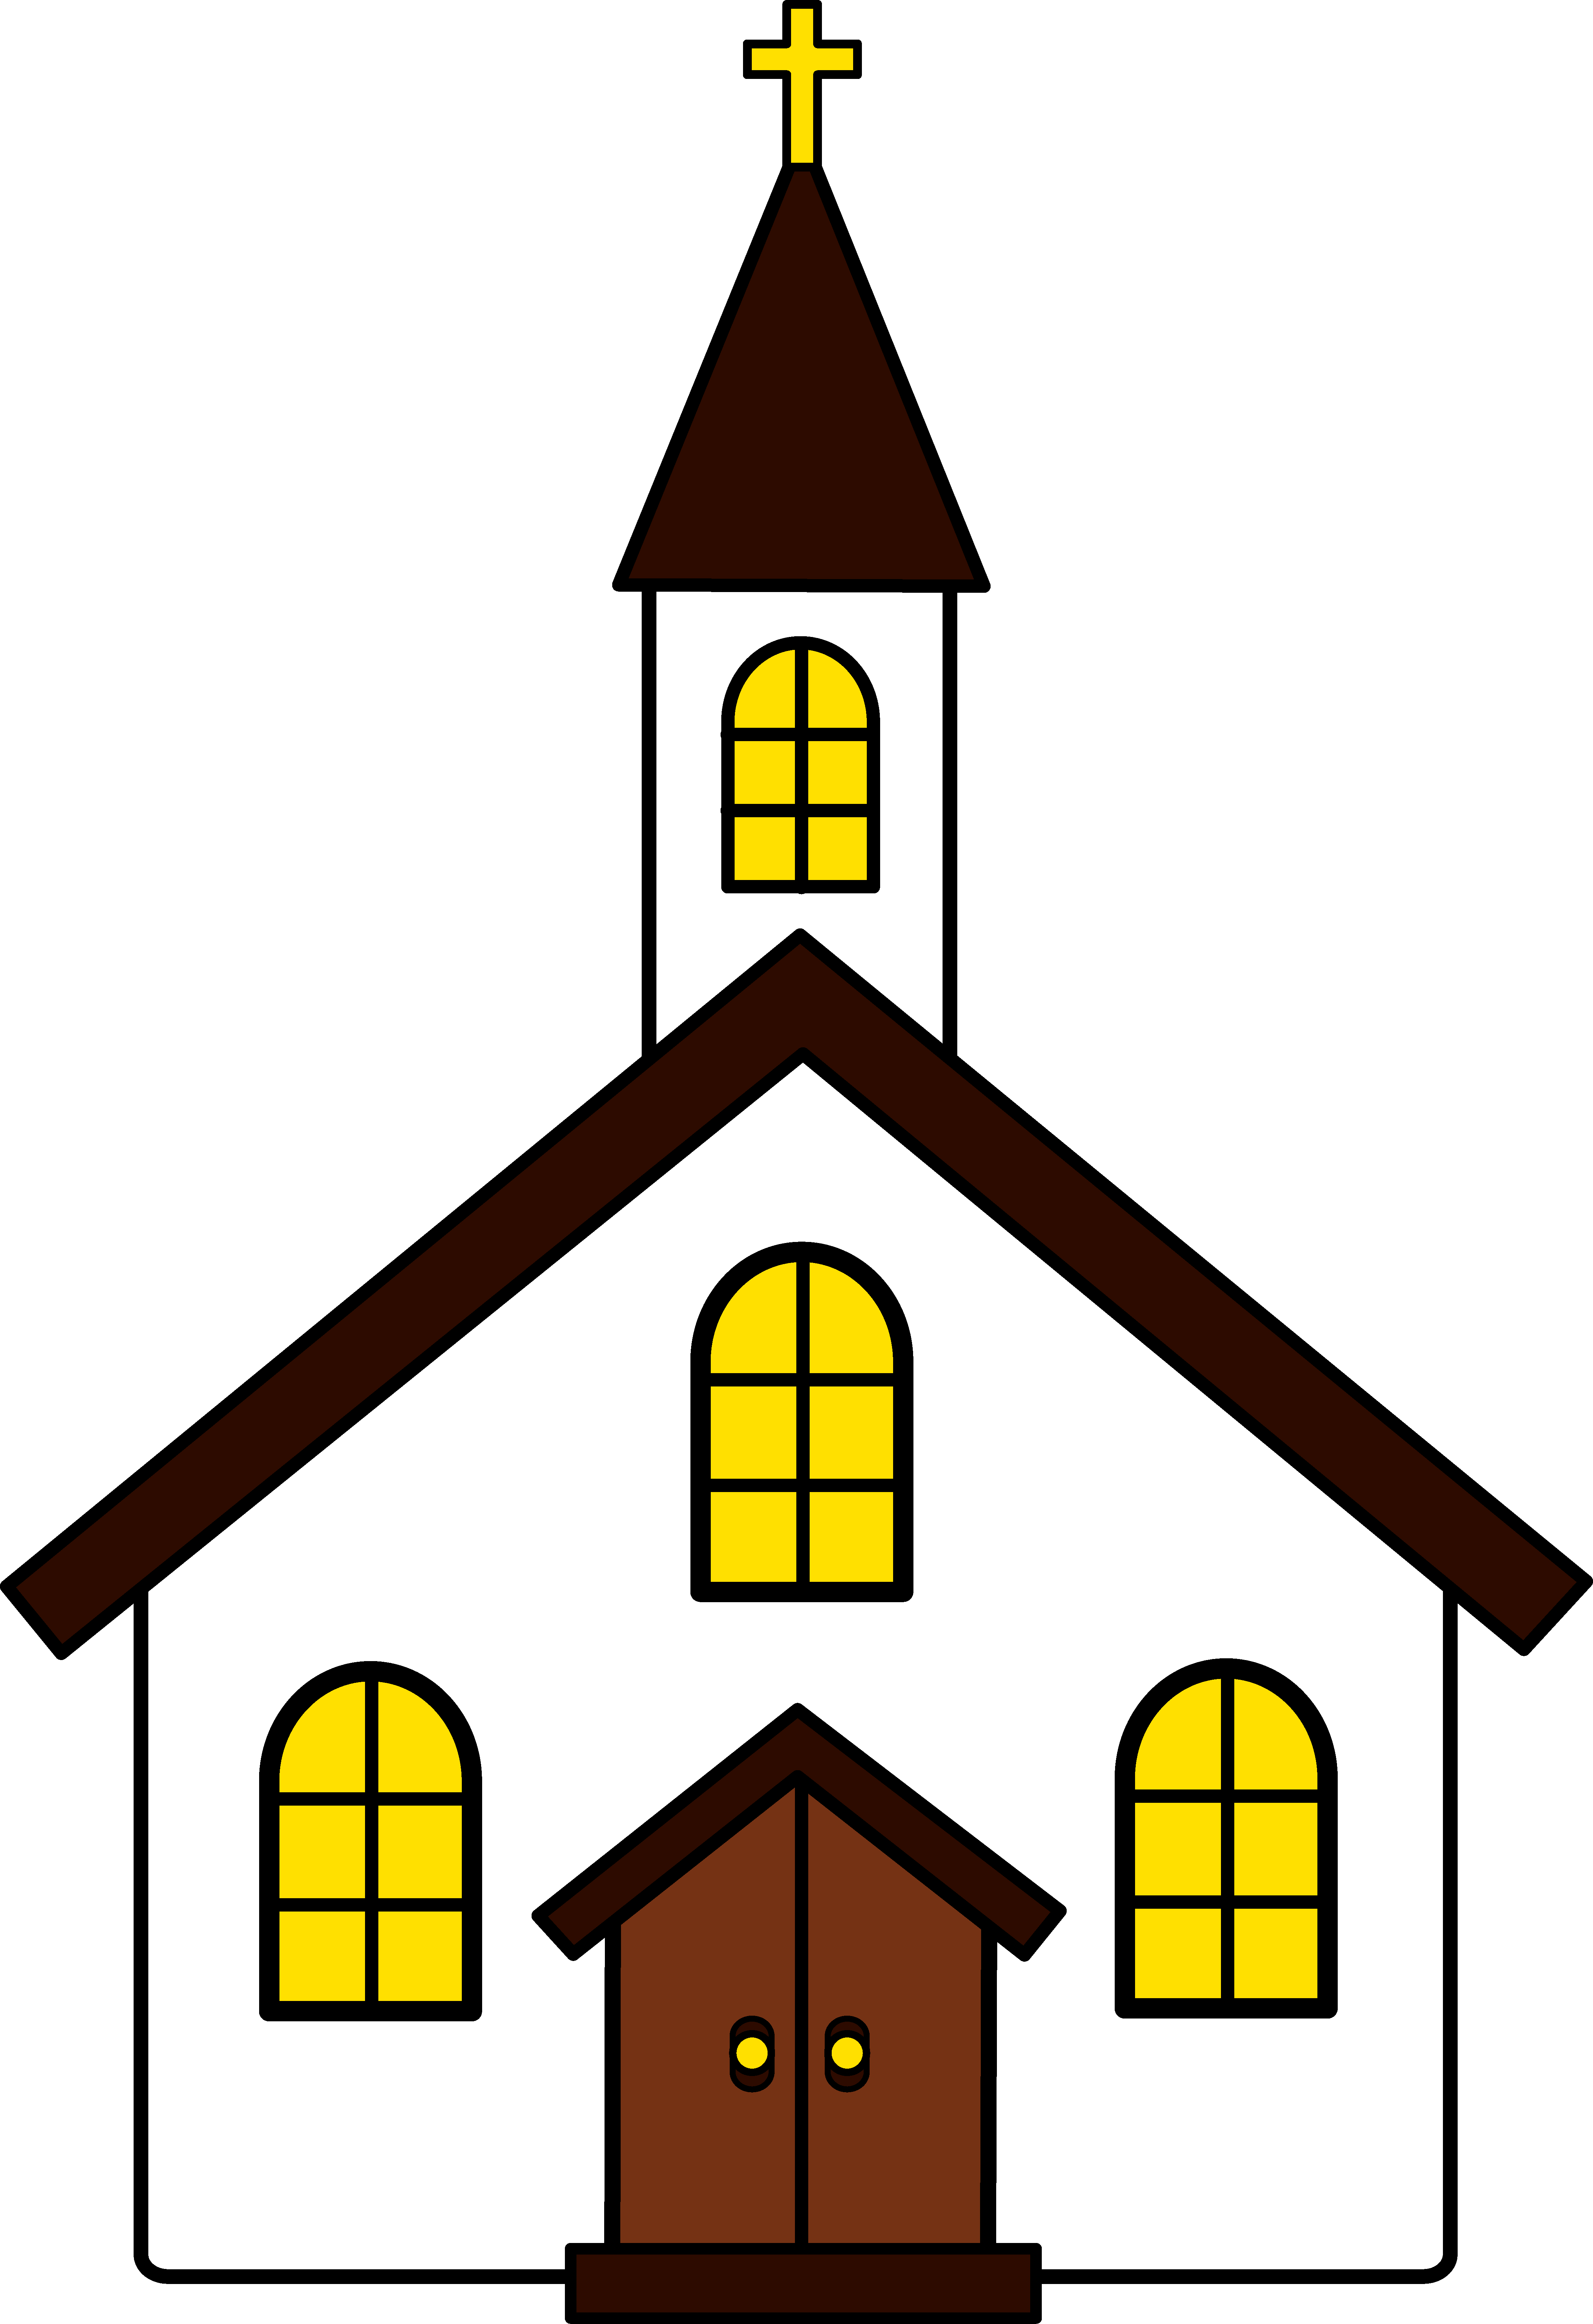 Old church house clipart